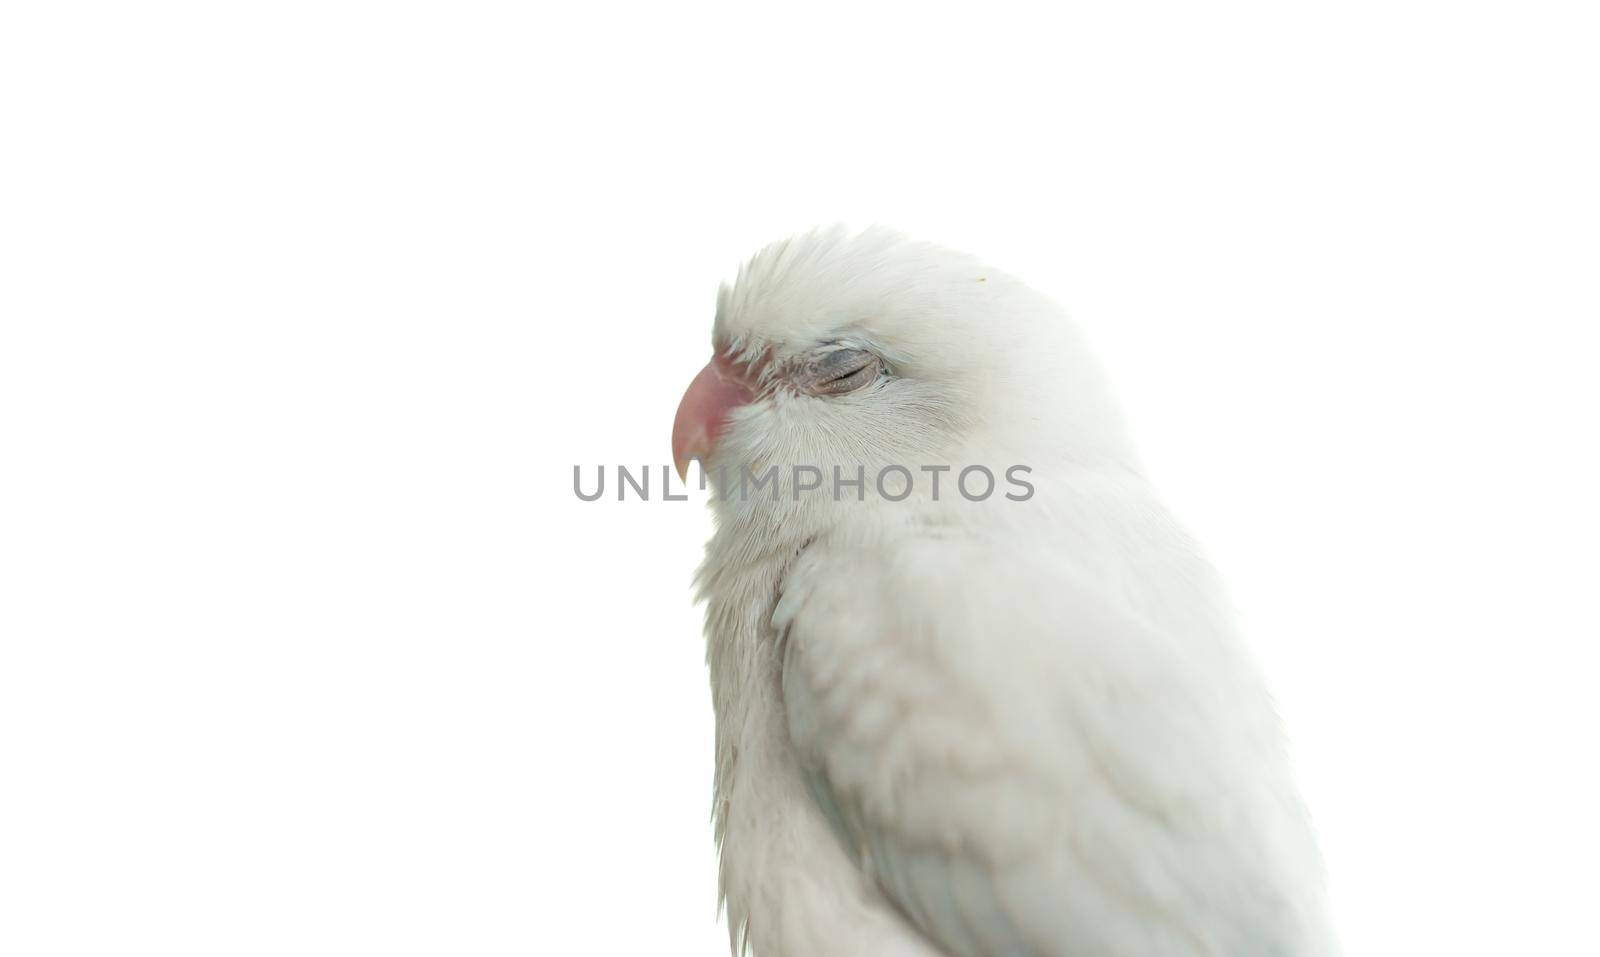 Tiny white parrot parakeet Forpus bird, white isolation background. by sirawit99